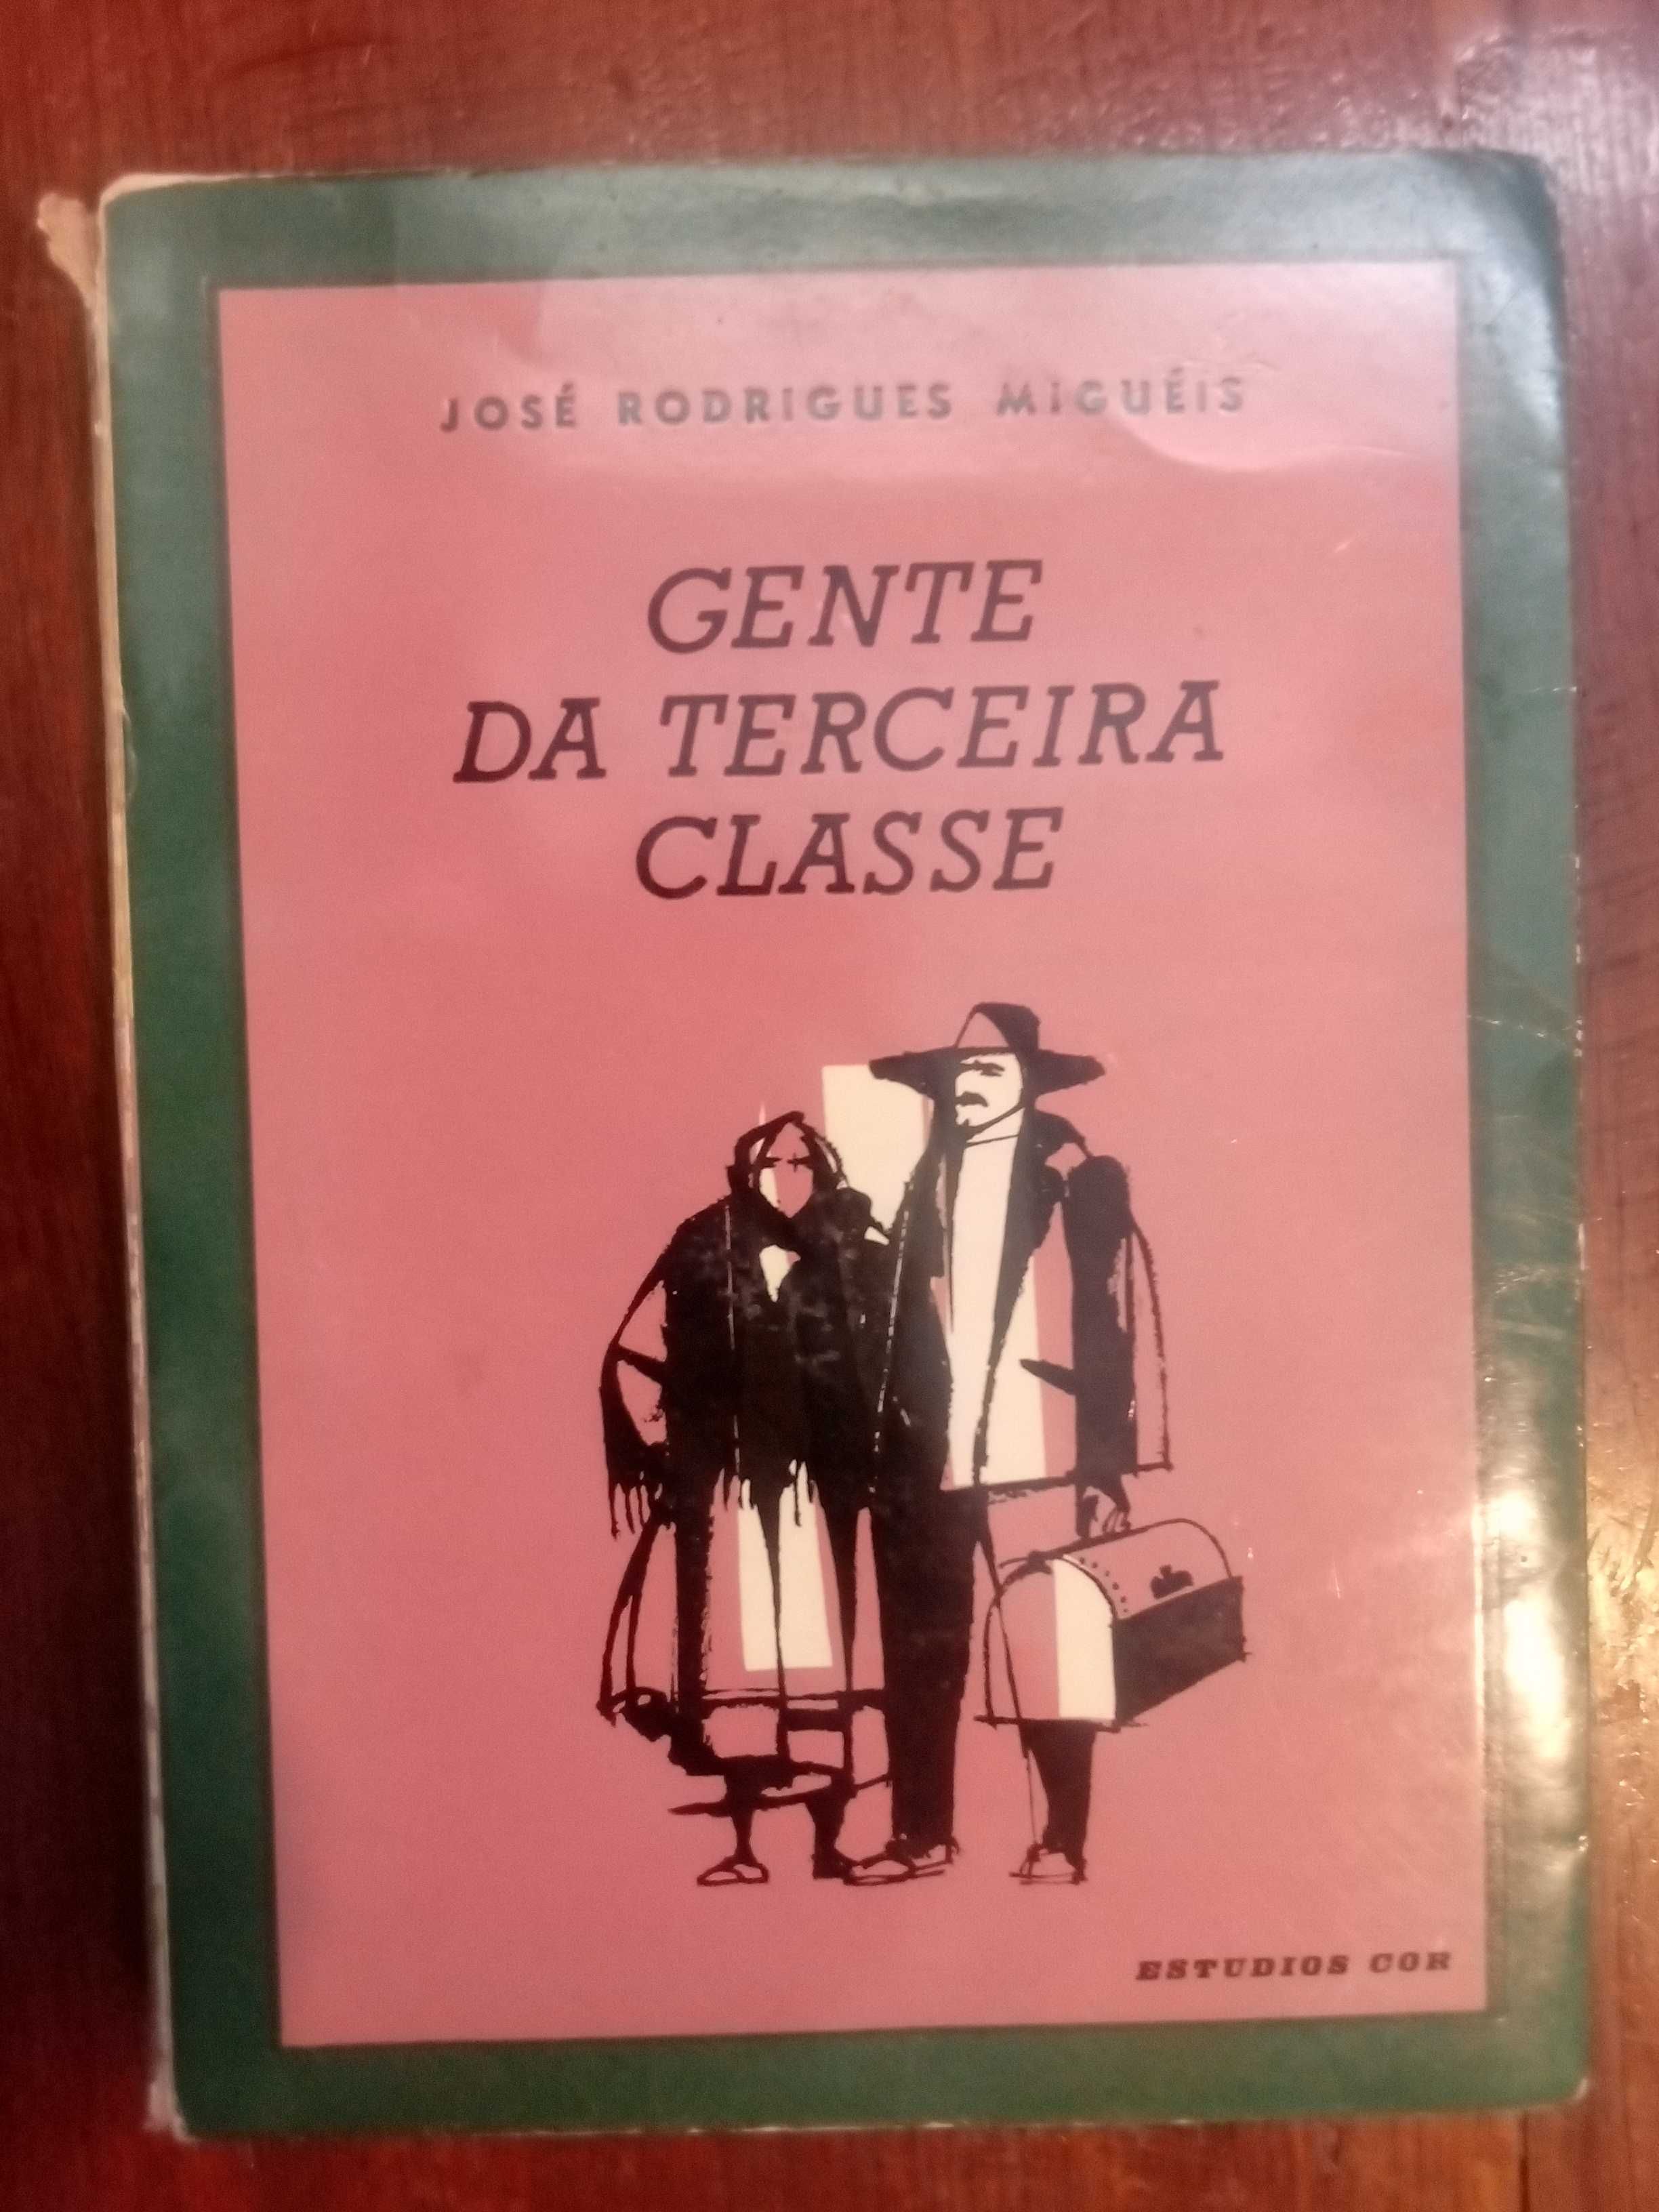 José Rodrigues Miguéis - Gente da terceira classe [1.ª ed.]